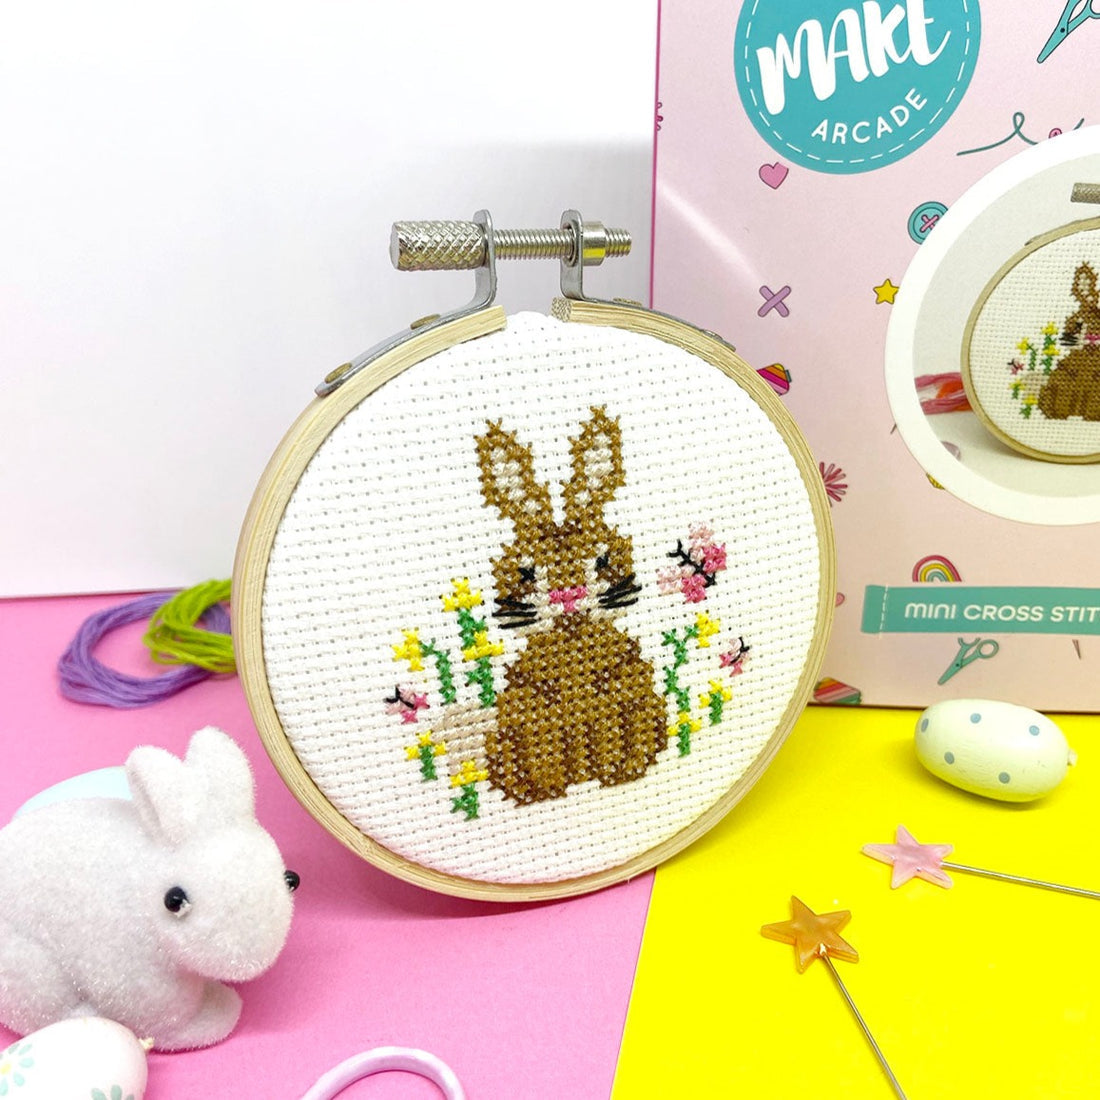 The Make Arcade ‘Bunny’ Mini Cross Stitch Kit